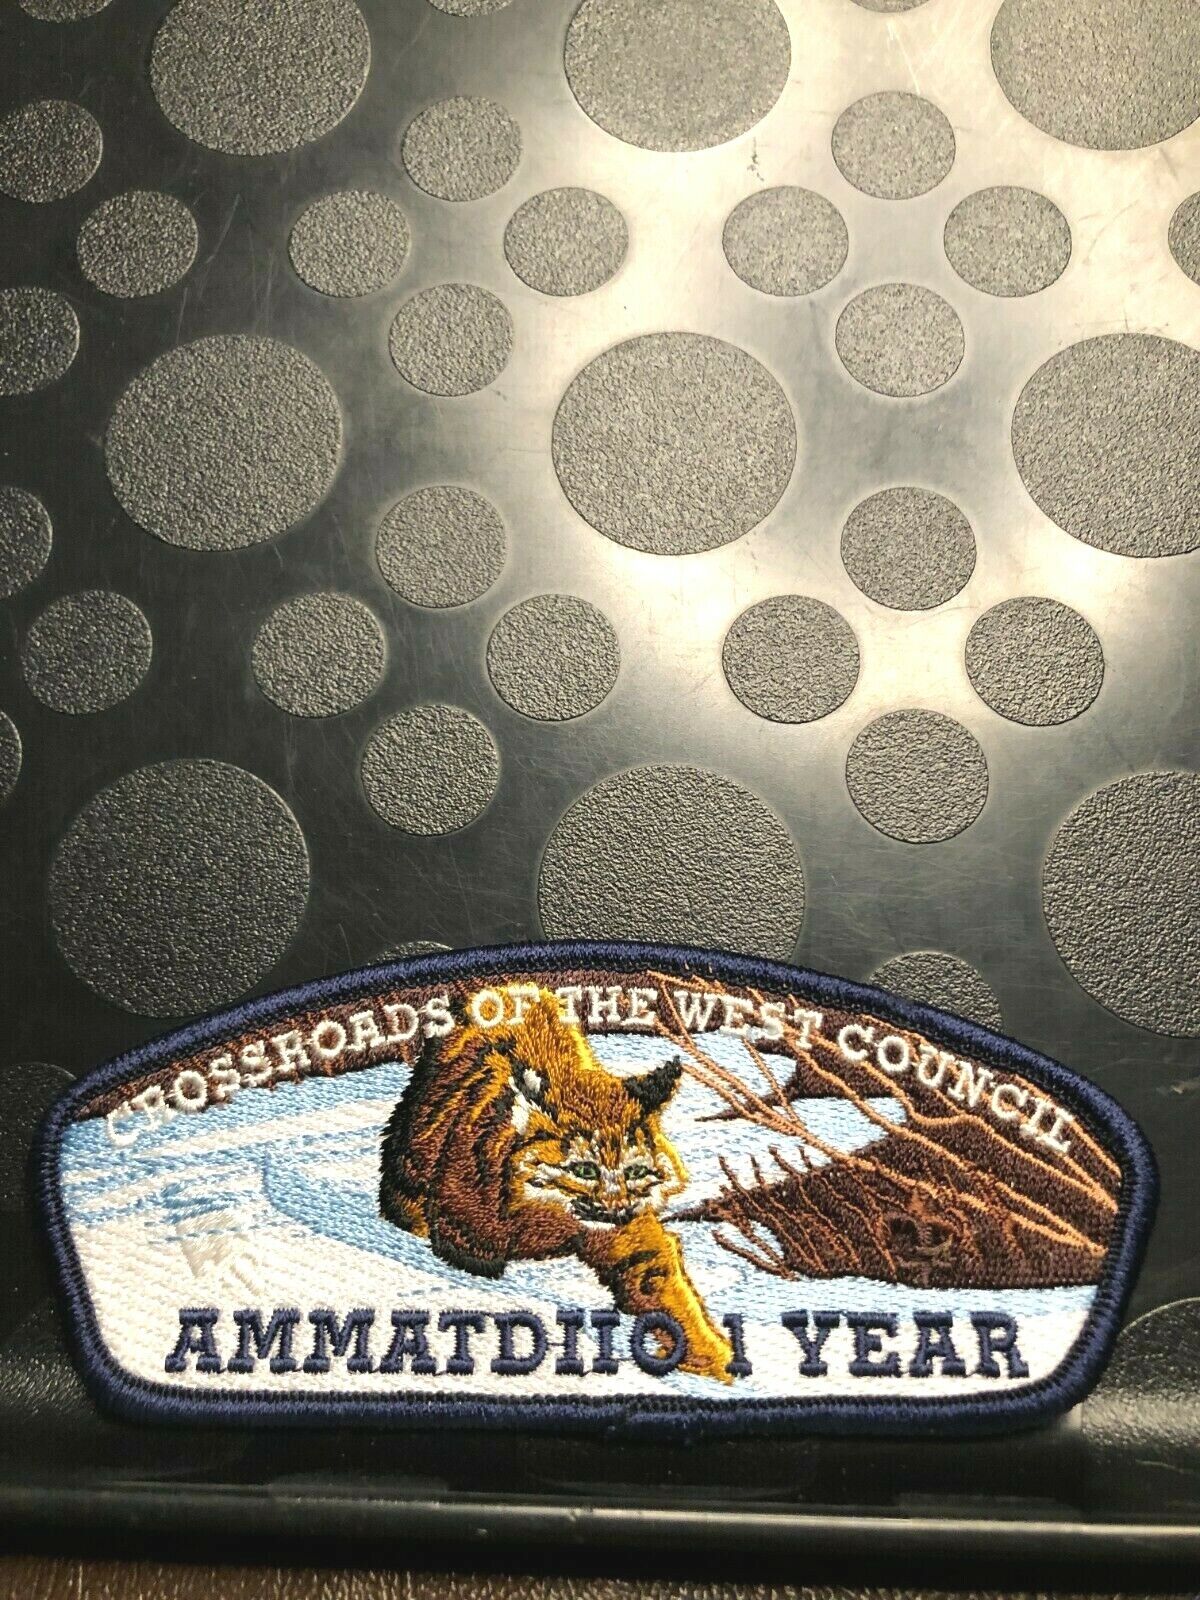 OA AMMATDIIO LODGE 590 CROSSROADS OF THE WEST COUNCIL 1st ANN SHOULDER PATCH